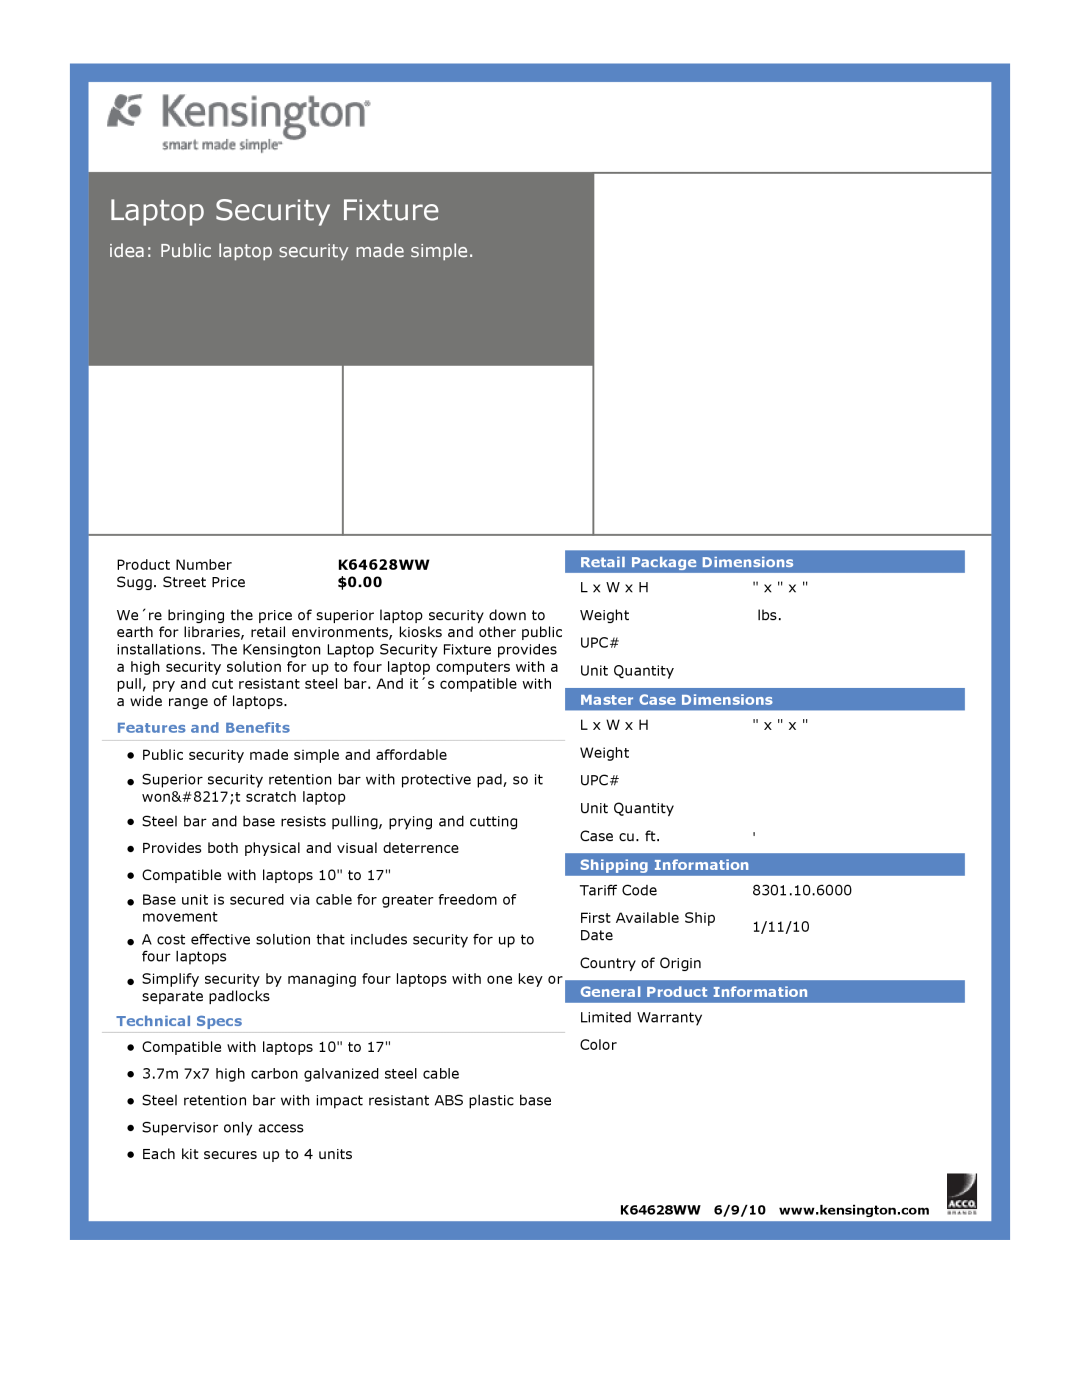 Kensington EU64325 Laptop Security Fixture, idea: Public laptop security made simple, $0.00, Features and Benefits 